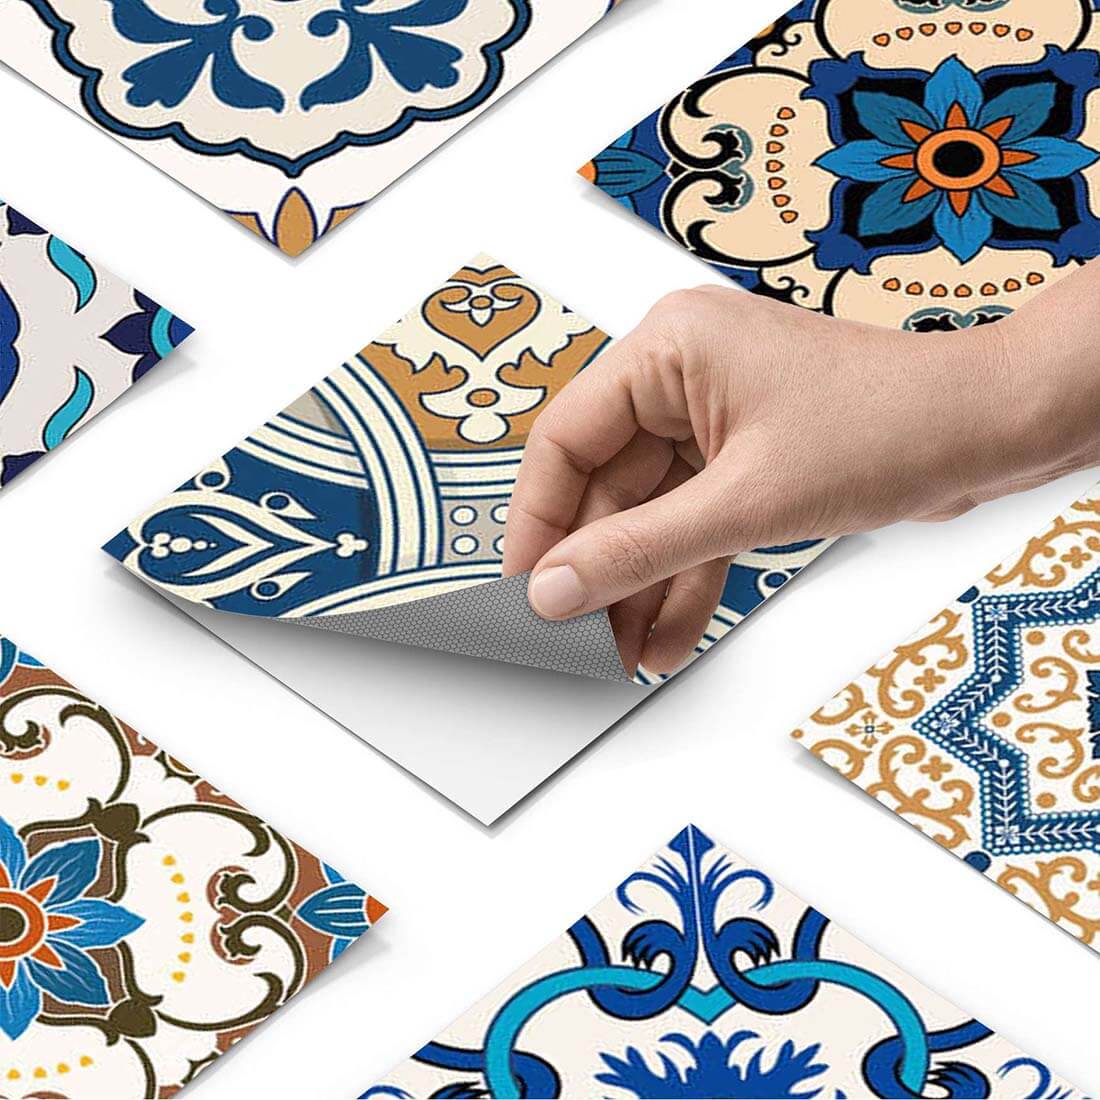 Klebefliesen Lisboa Azulejos - Paket - creatisto pds1